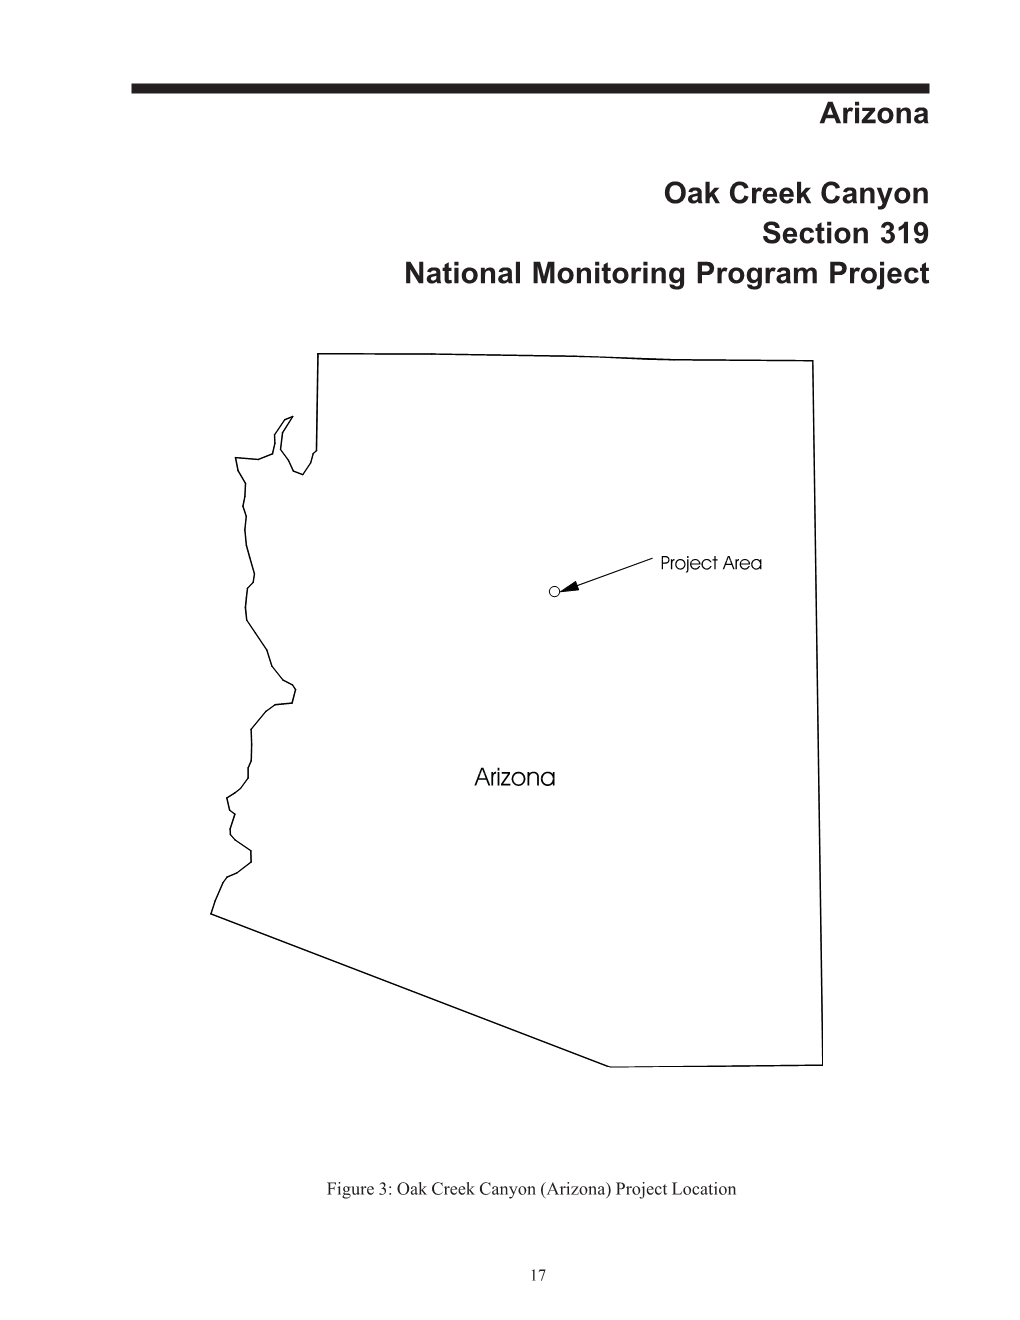 Arizona Oak Creek Canyon Section 319 National Monitoring Program